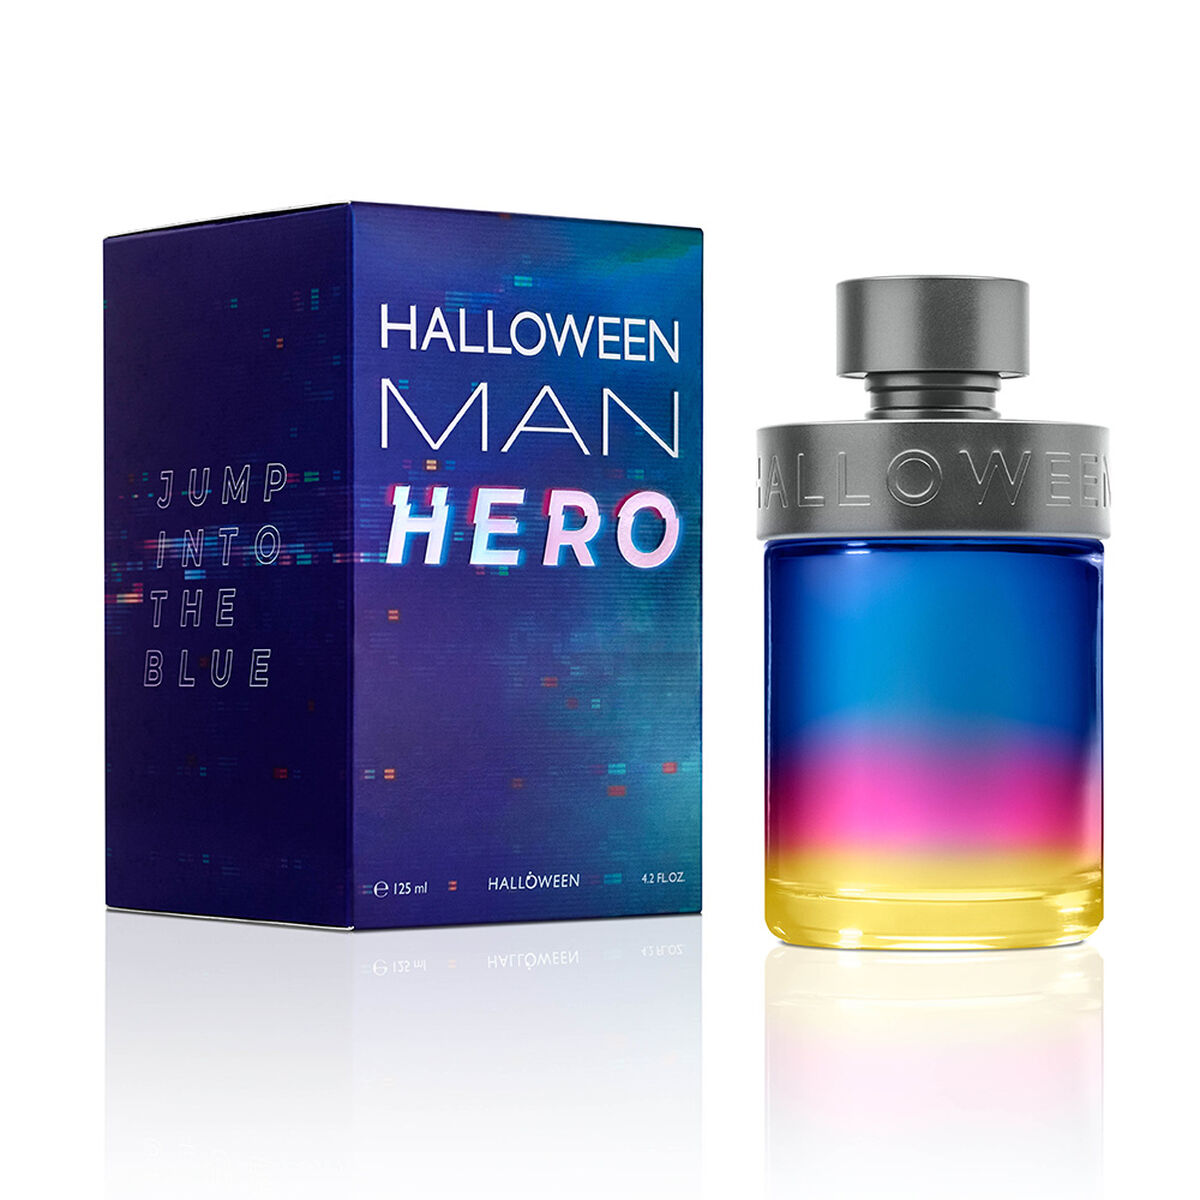 Perfume Halloween Man Hero EDT 125 ml